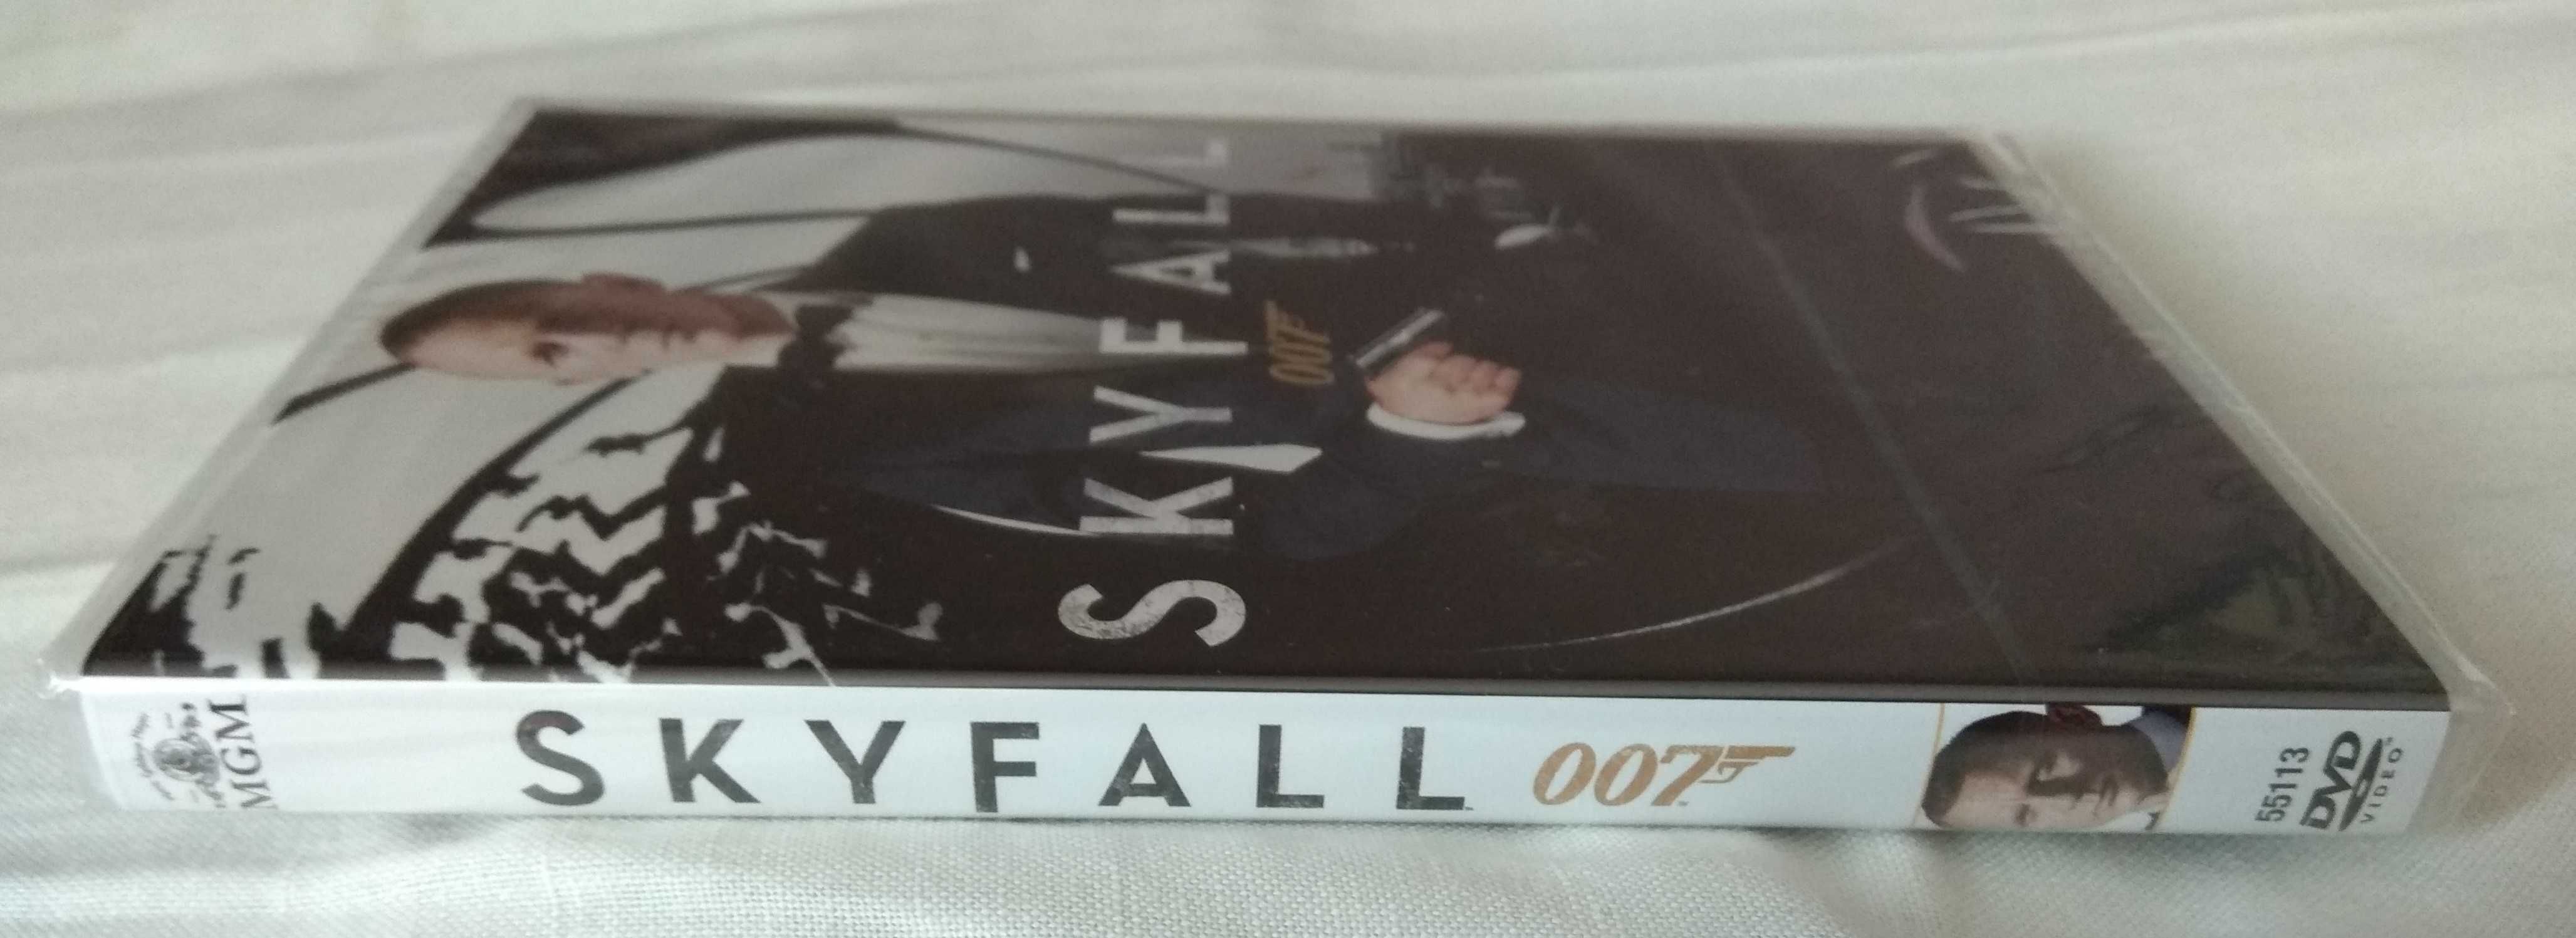 Film DVD - James Bond - Skyfall 007 - (2012r.) - NOWY